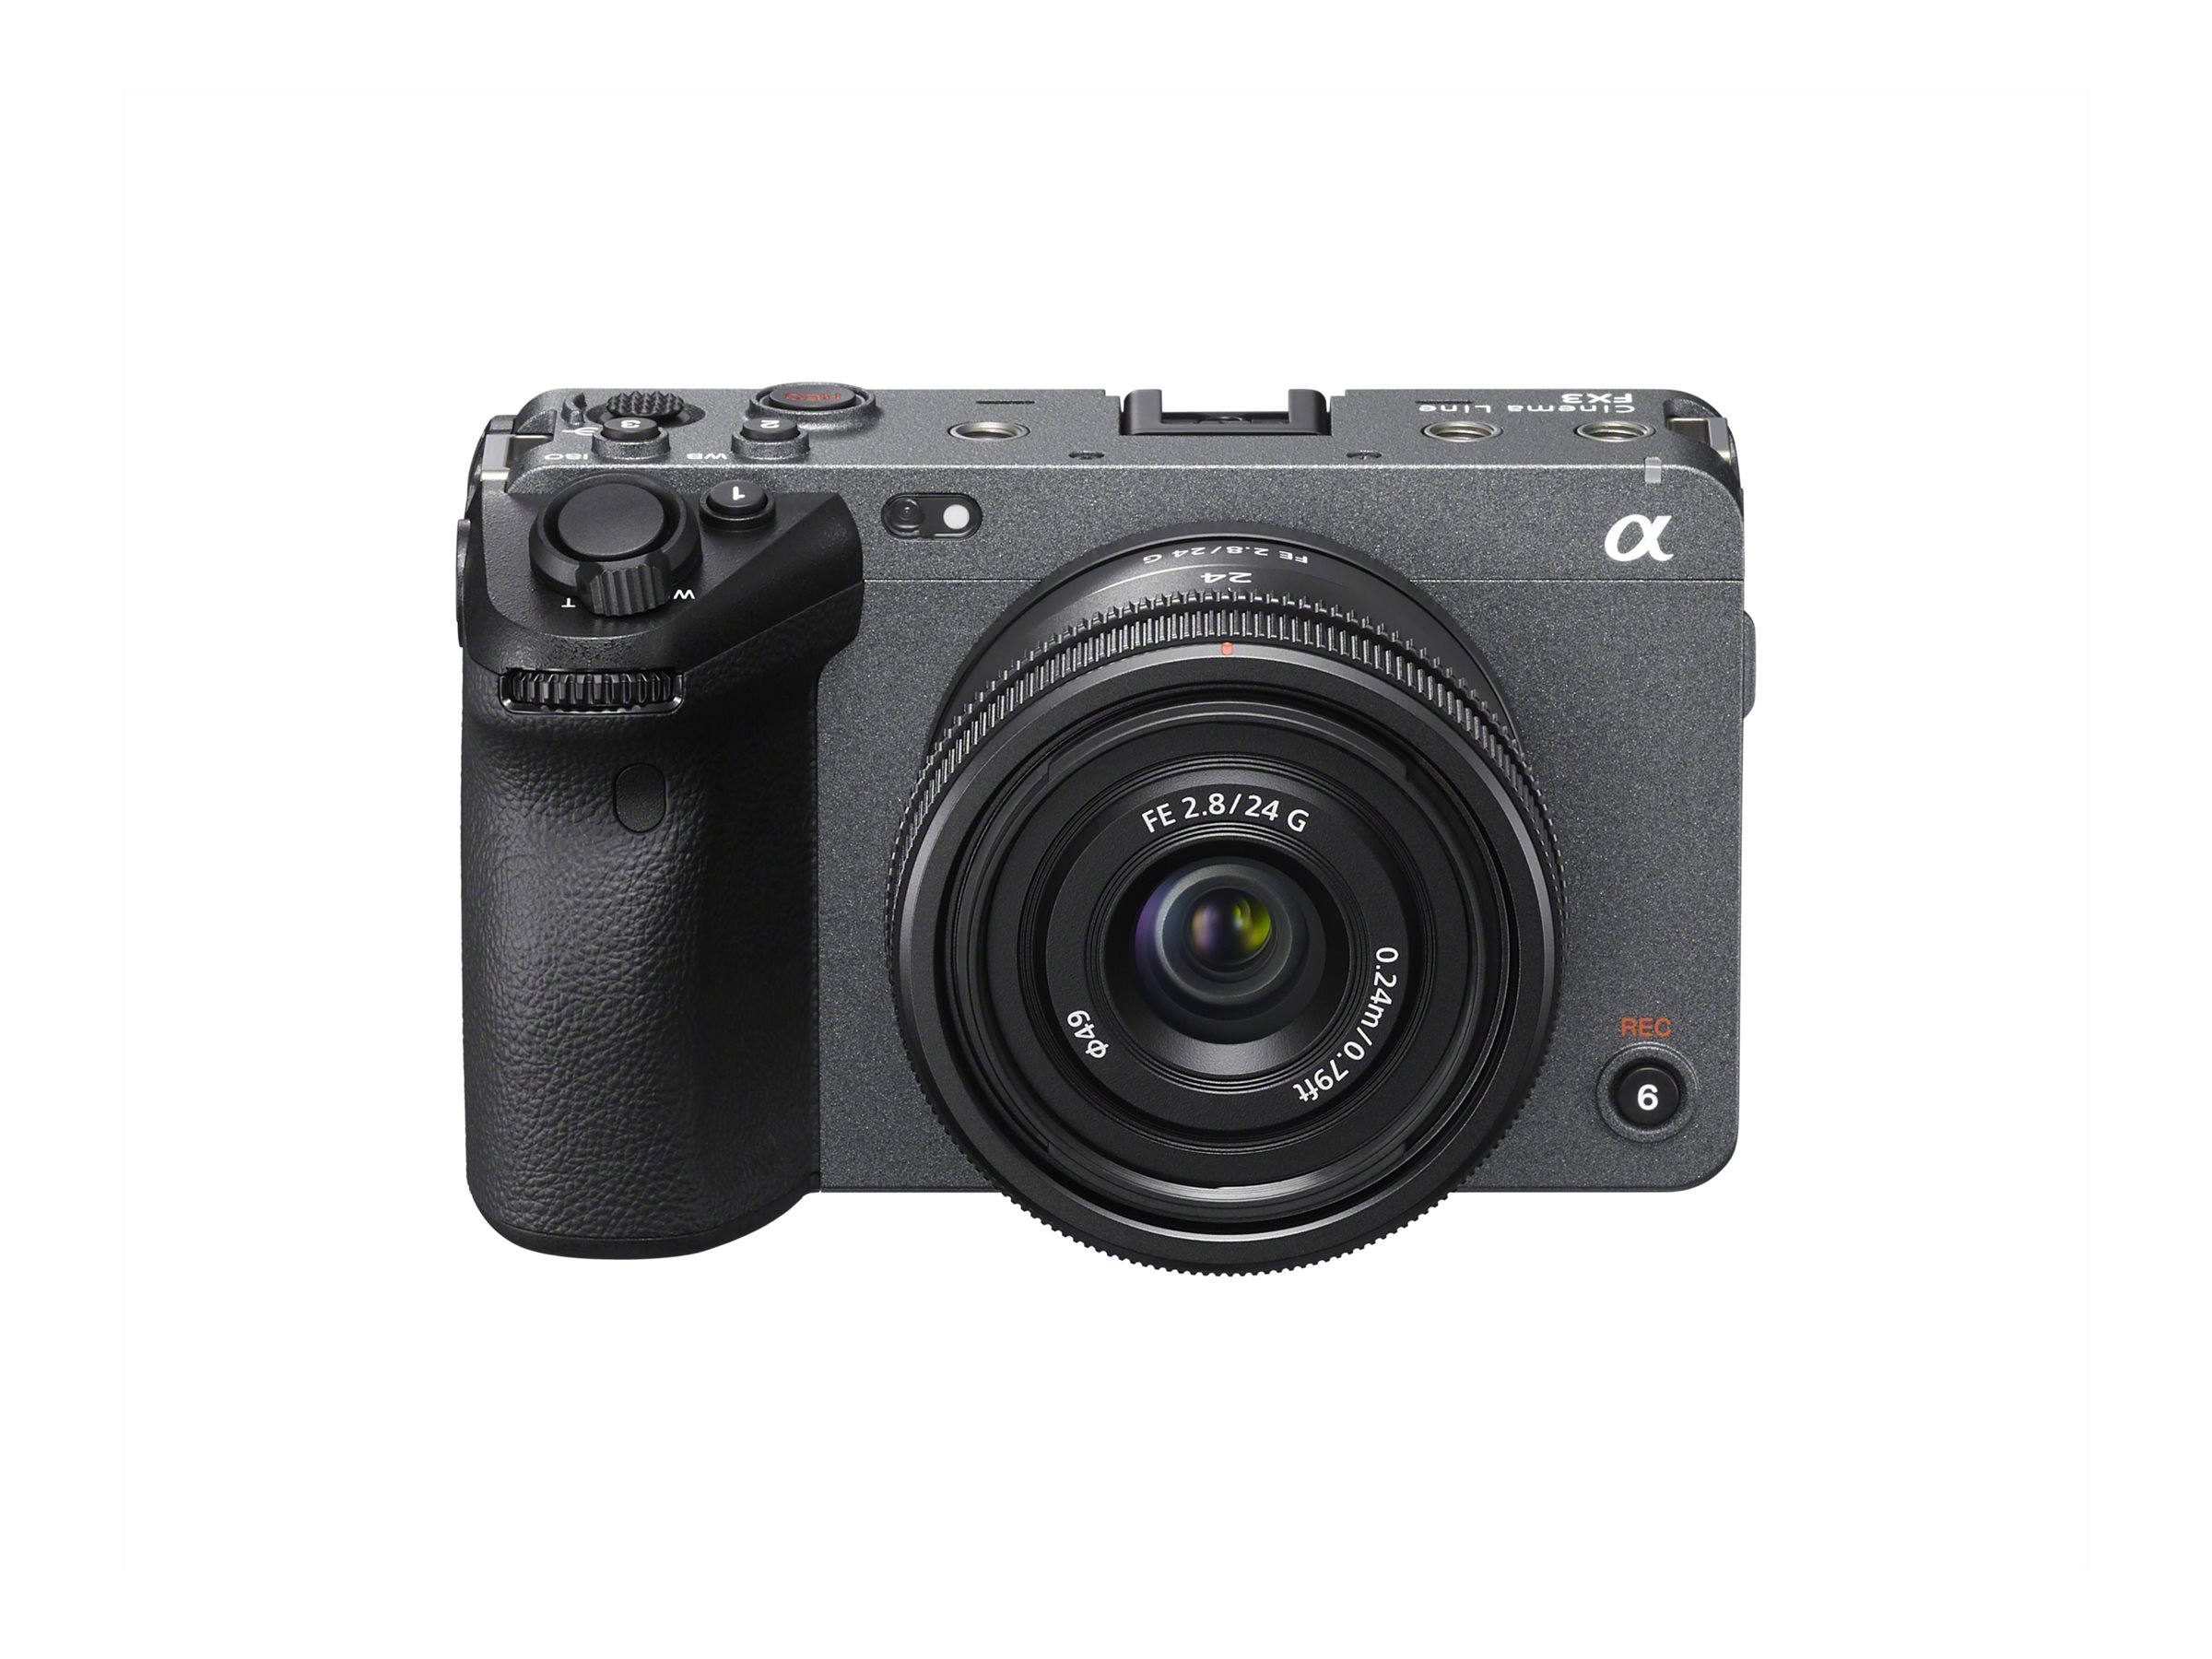 Sony FE 24mm f/2.8 G Wide-angle Camera Lens - Black - SEL24F28G